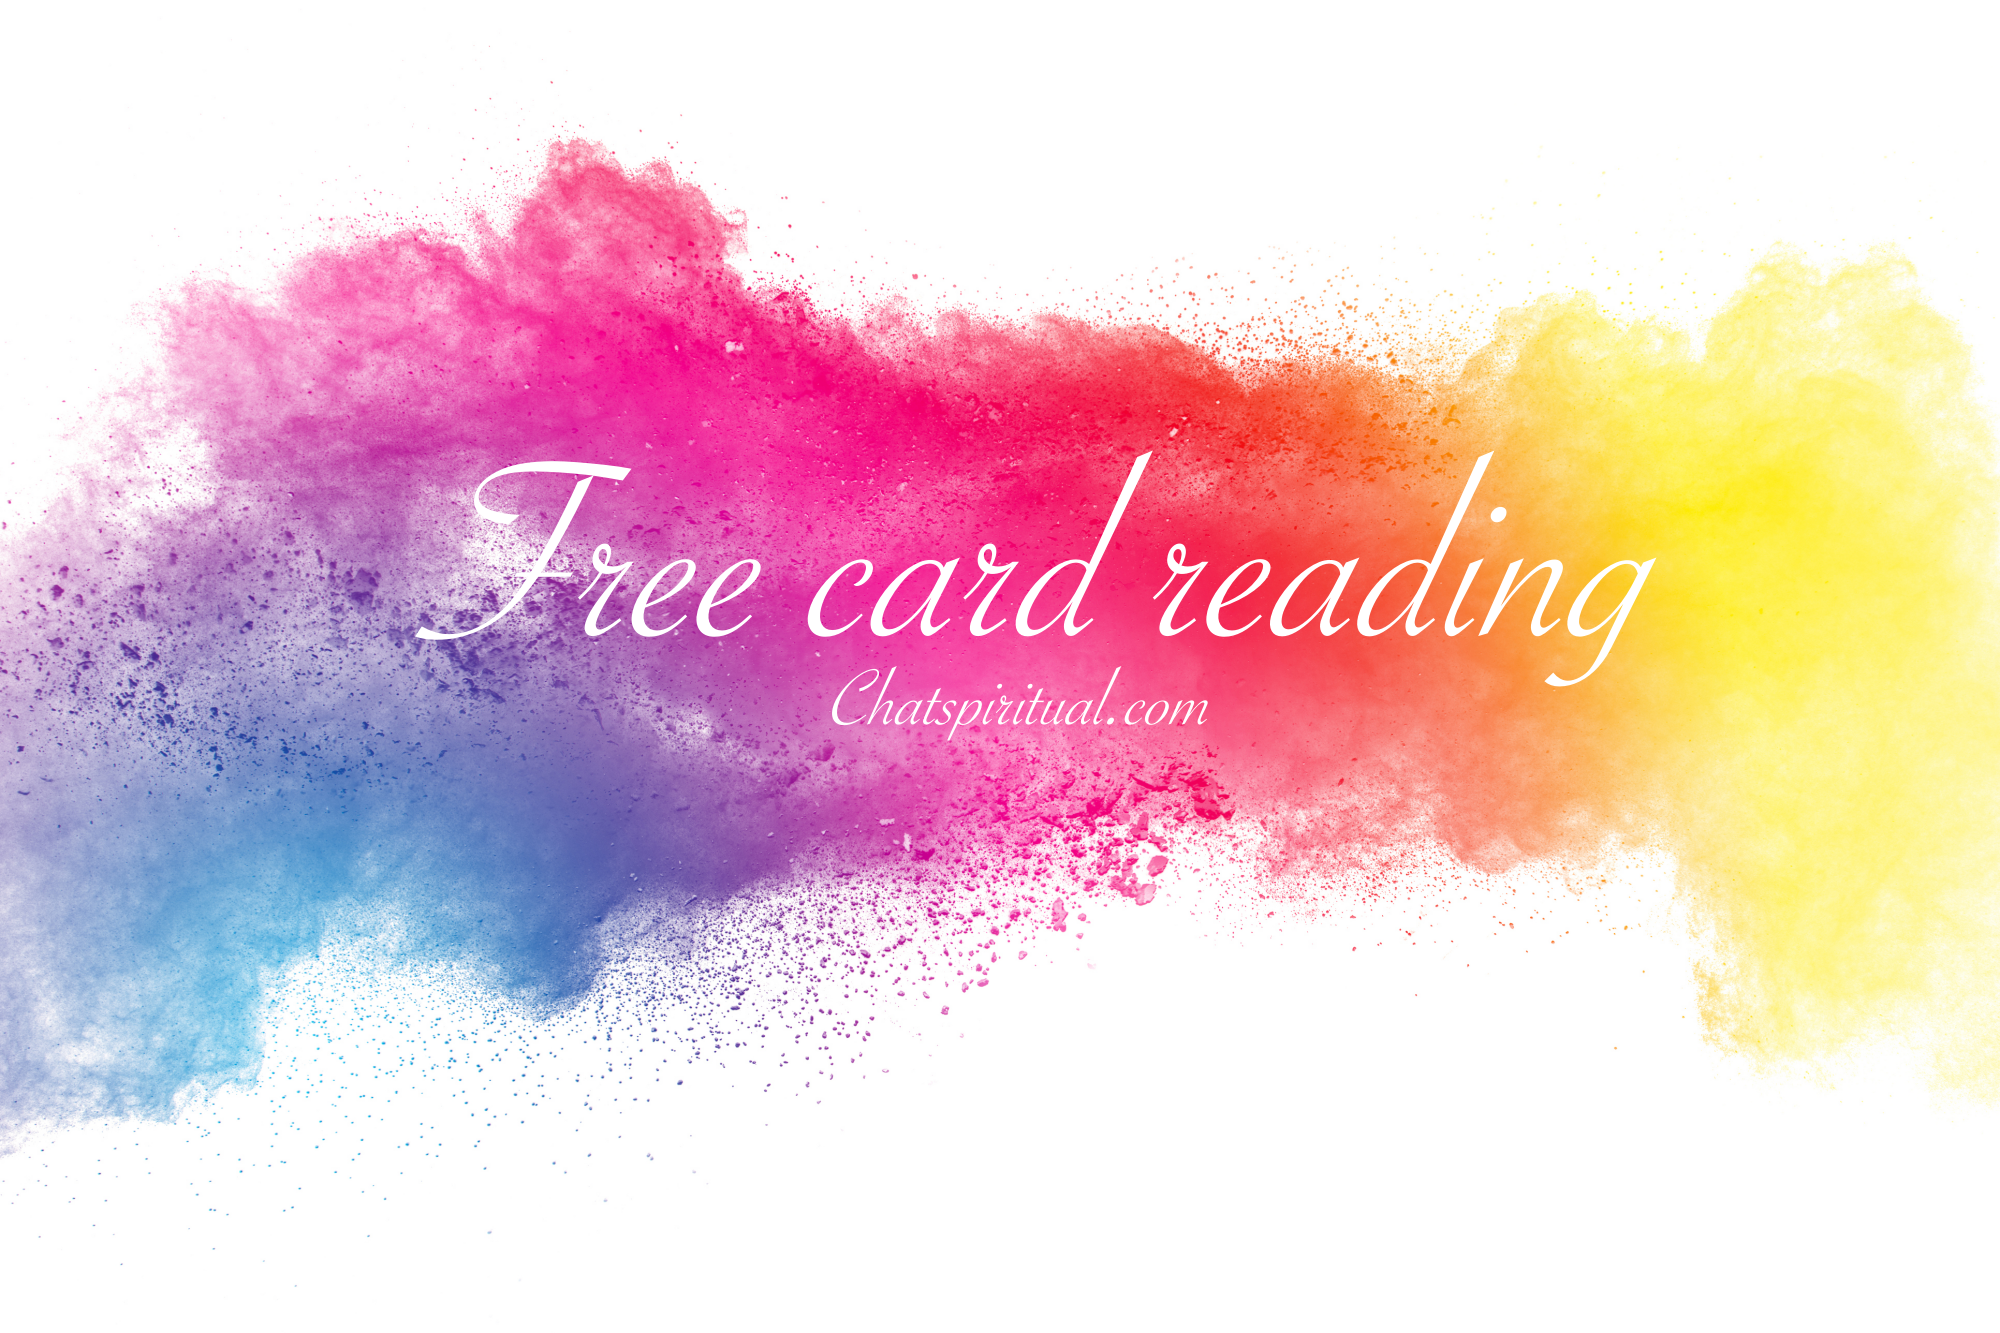 Free card reading